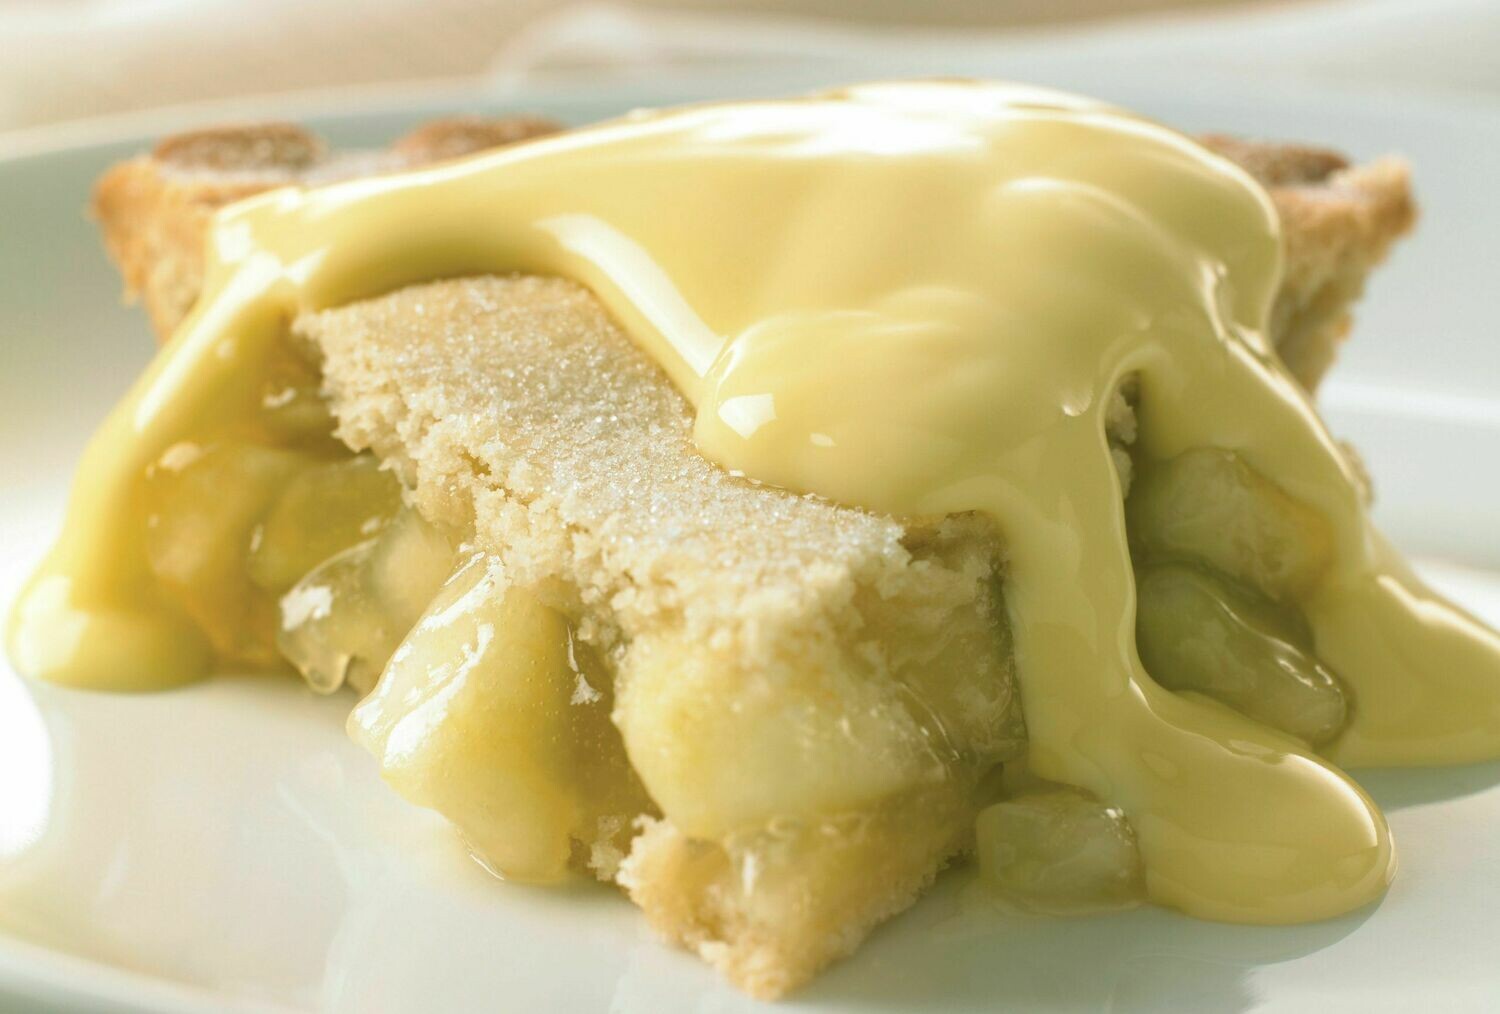 Apple Pie with custard and cream.